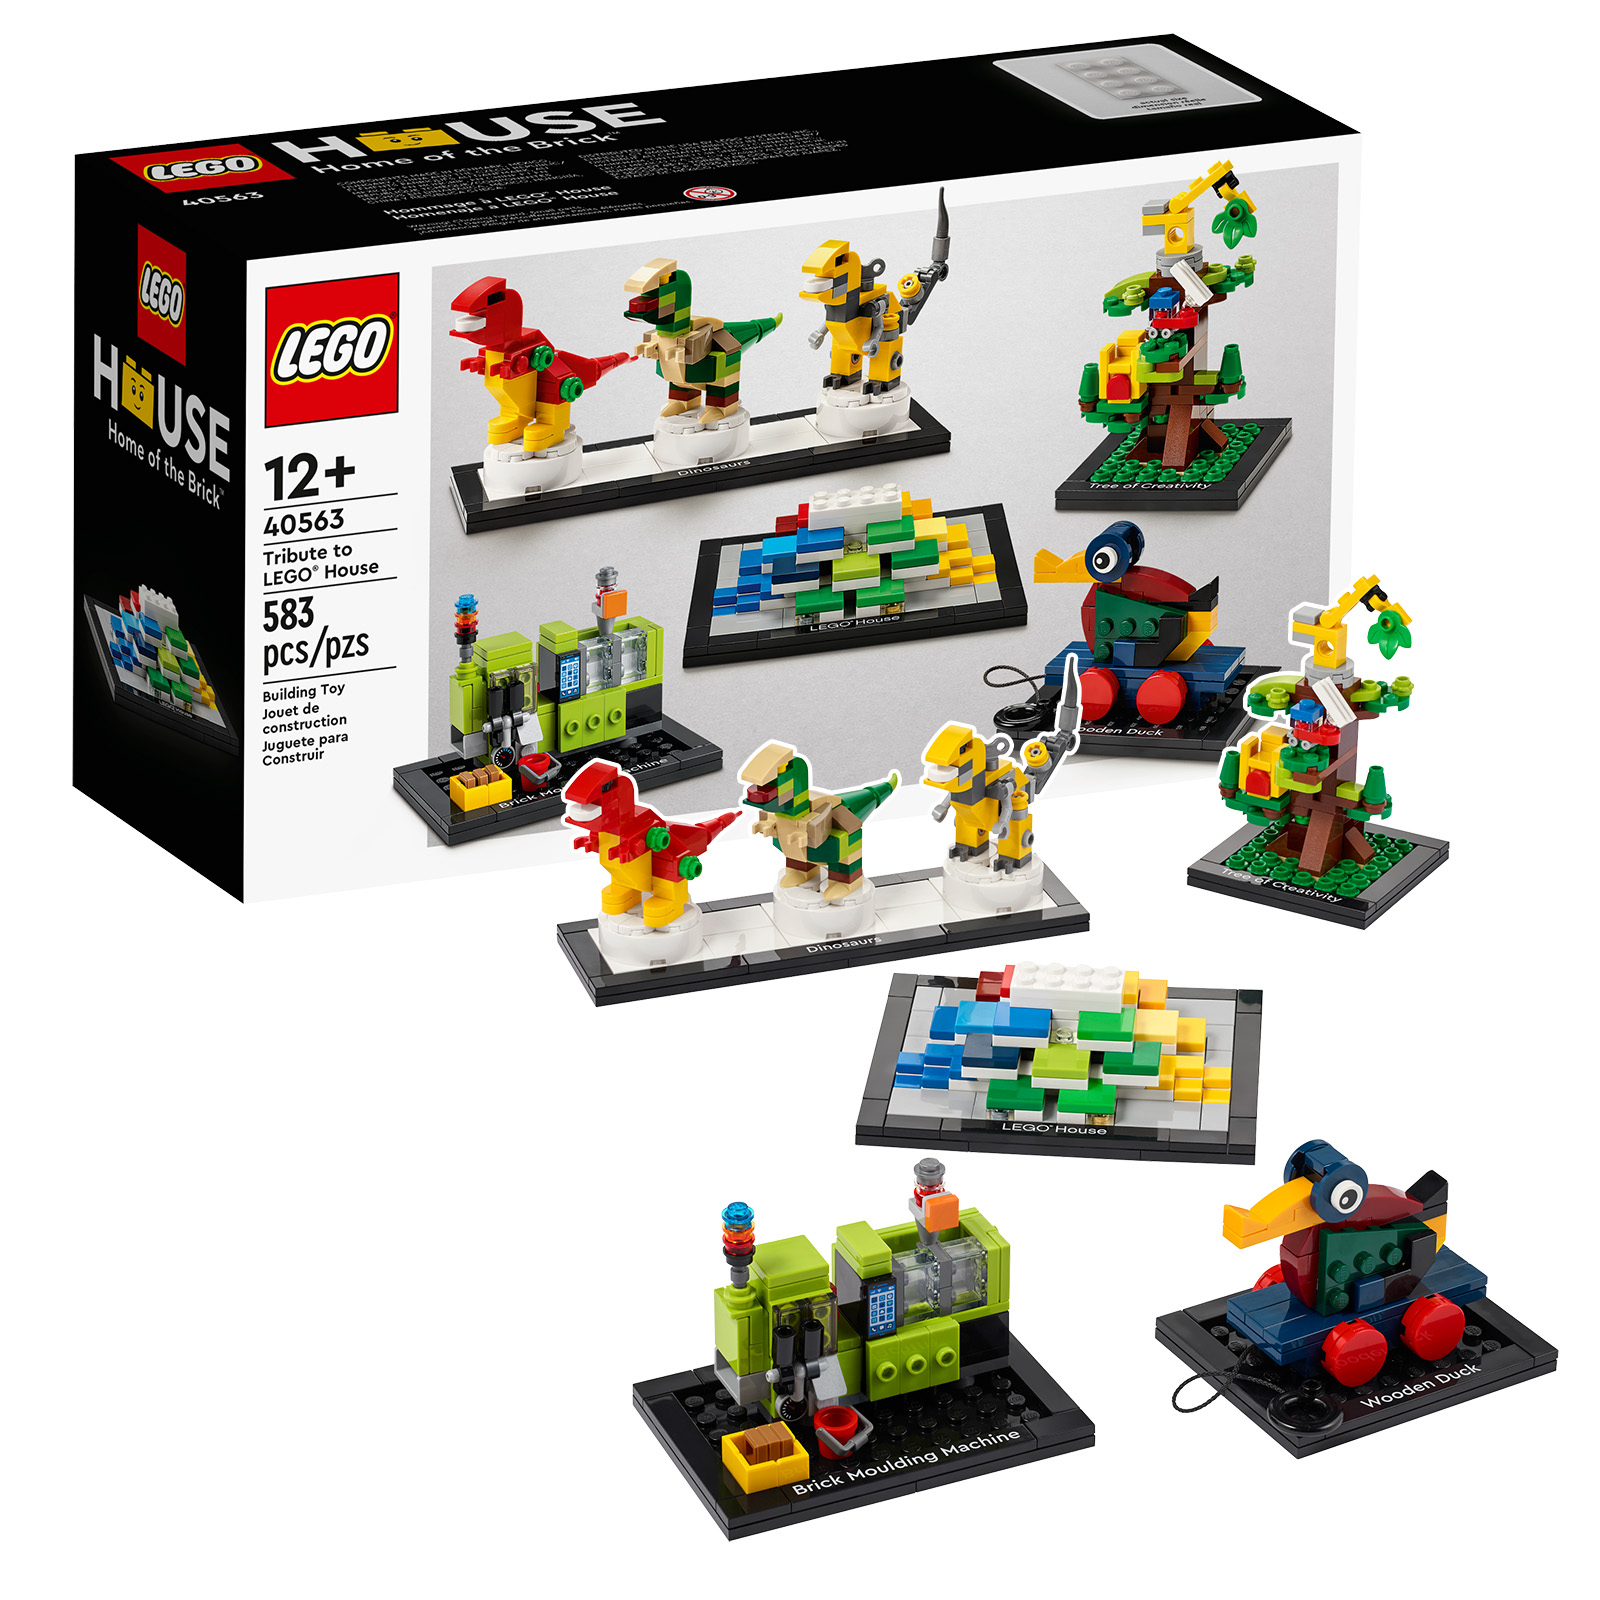 Pengingat: jam terakhir untuk mendapatkan salinan LEGO 40563 Tribute to LEGO House set